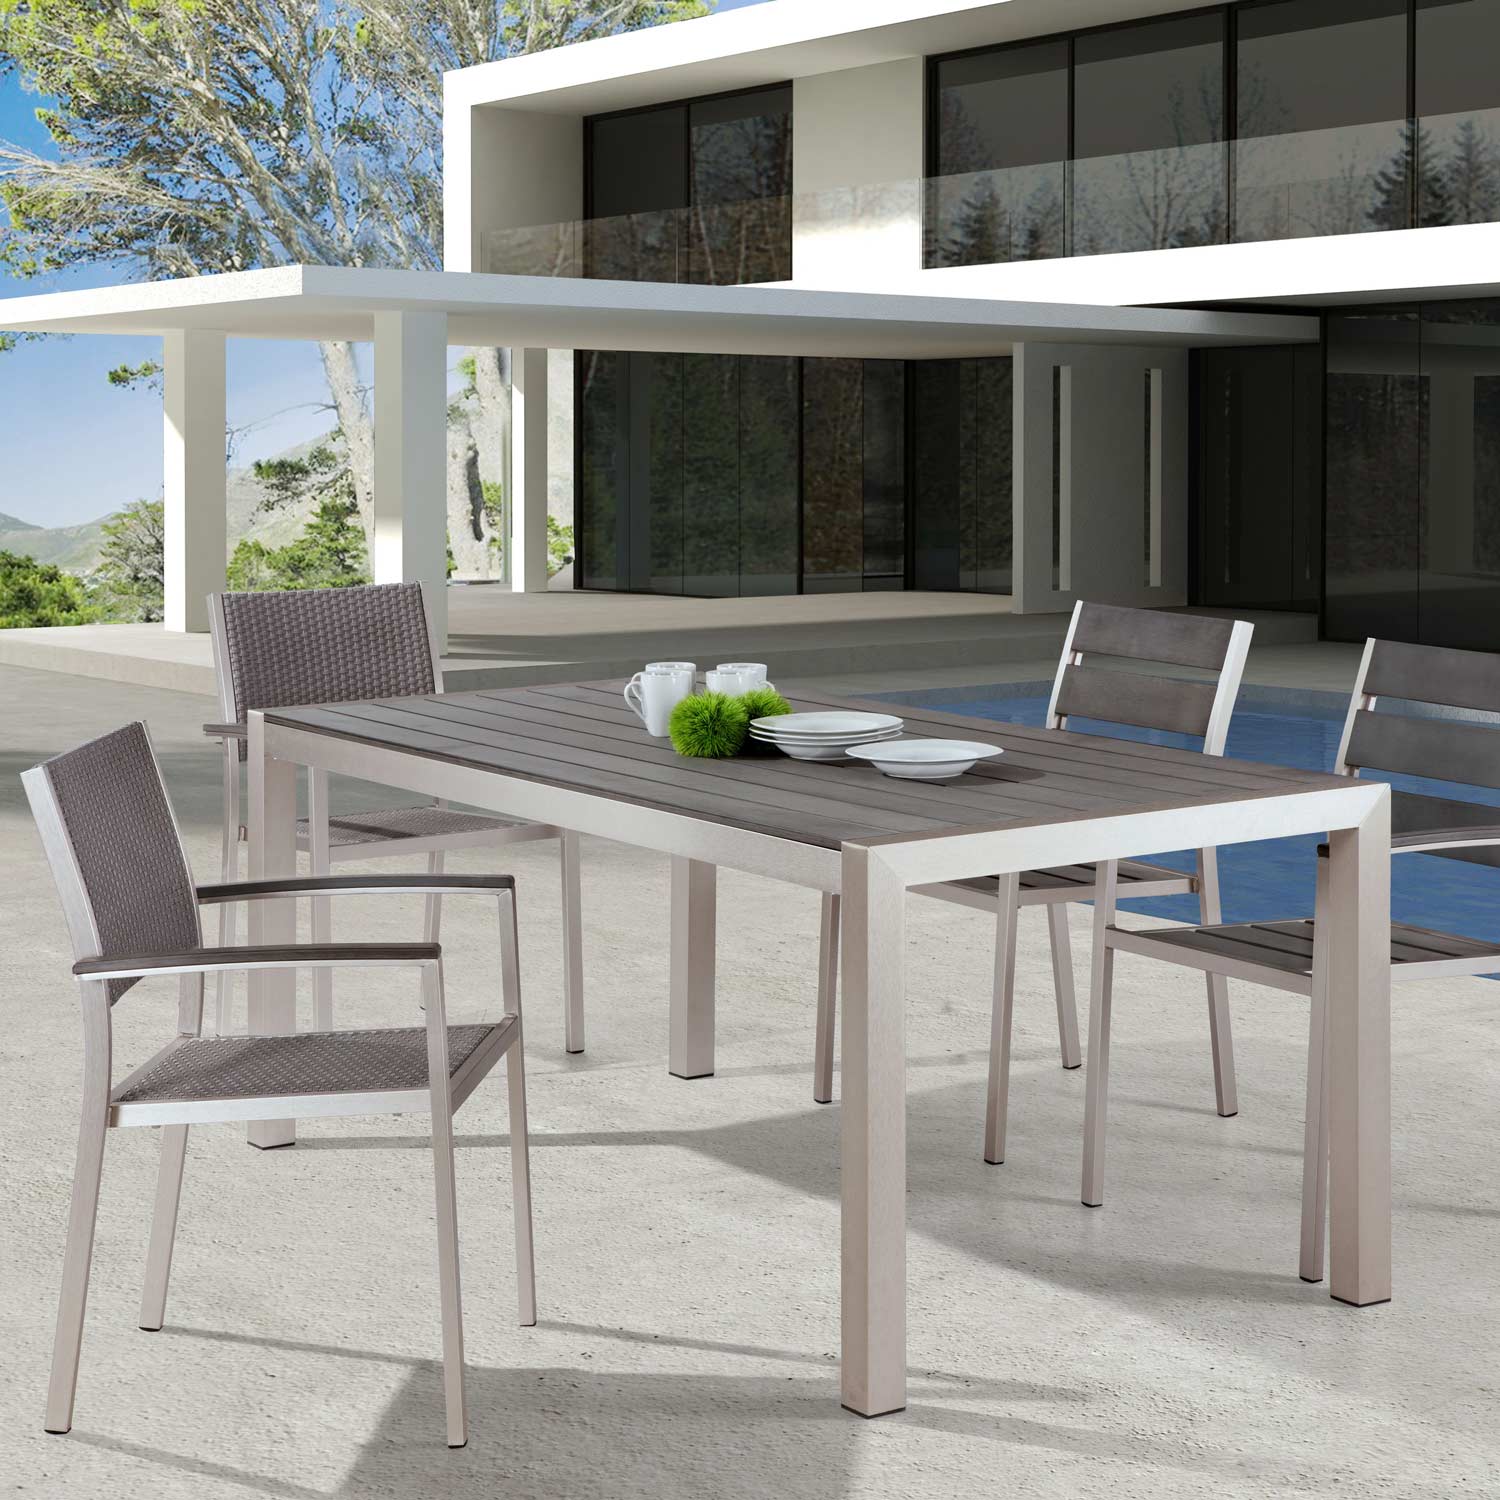 Metropolitan Outdoor Dining Table - Brushed Aluminum, Teak | DCG Stores